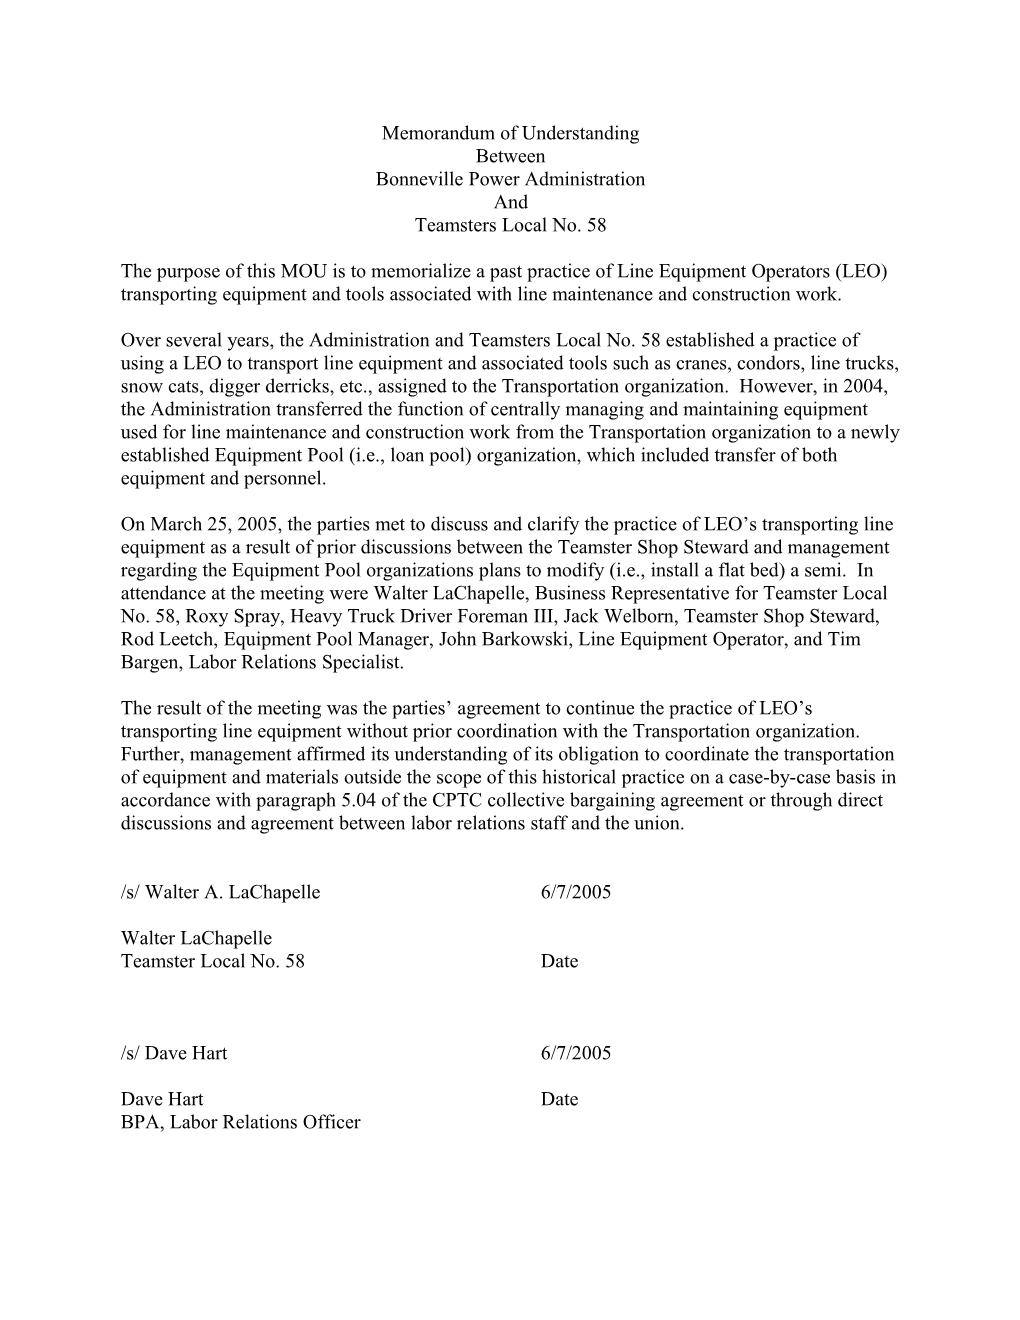 LEO’S Transporting Equipment:Memorandum Of Understanding Between Bonneville Power Administration And Teamsters Local No. 58